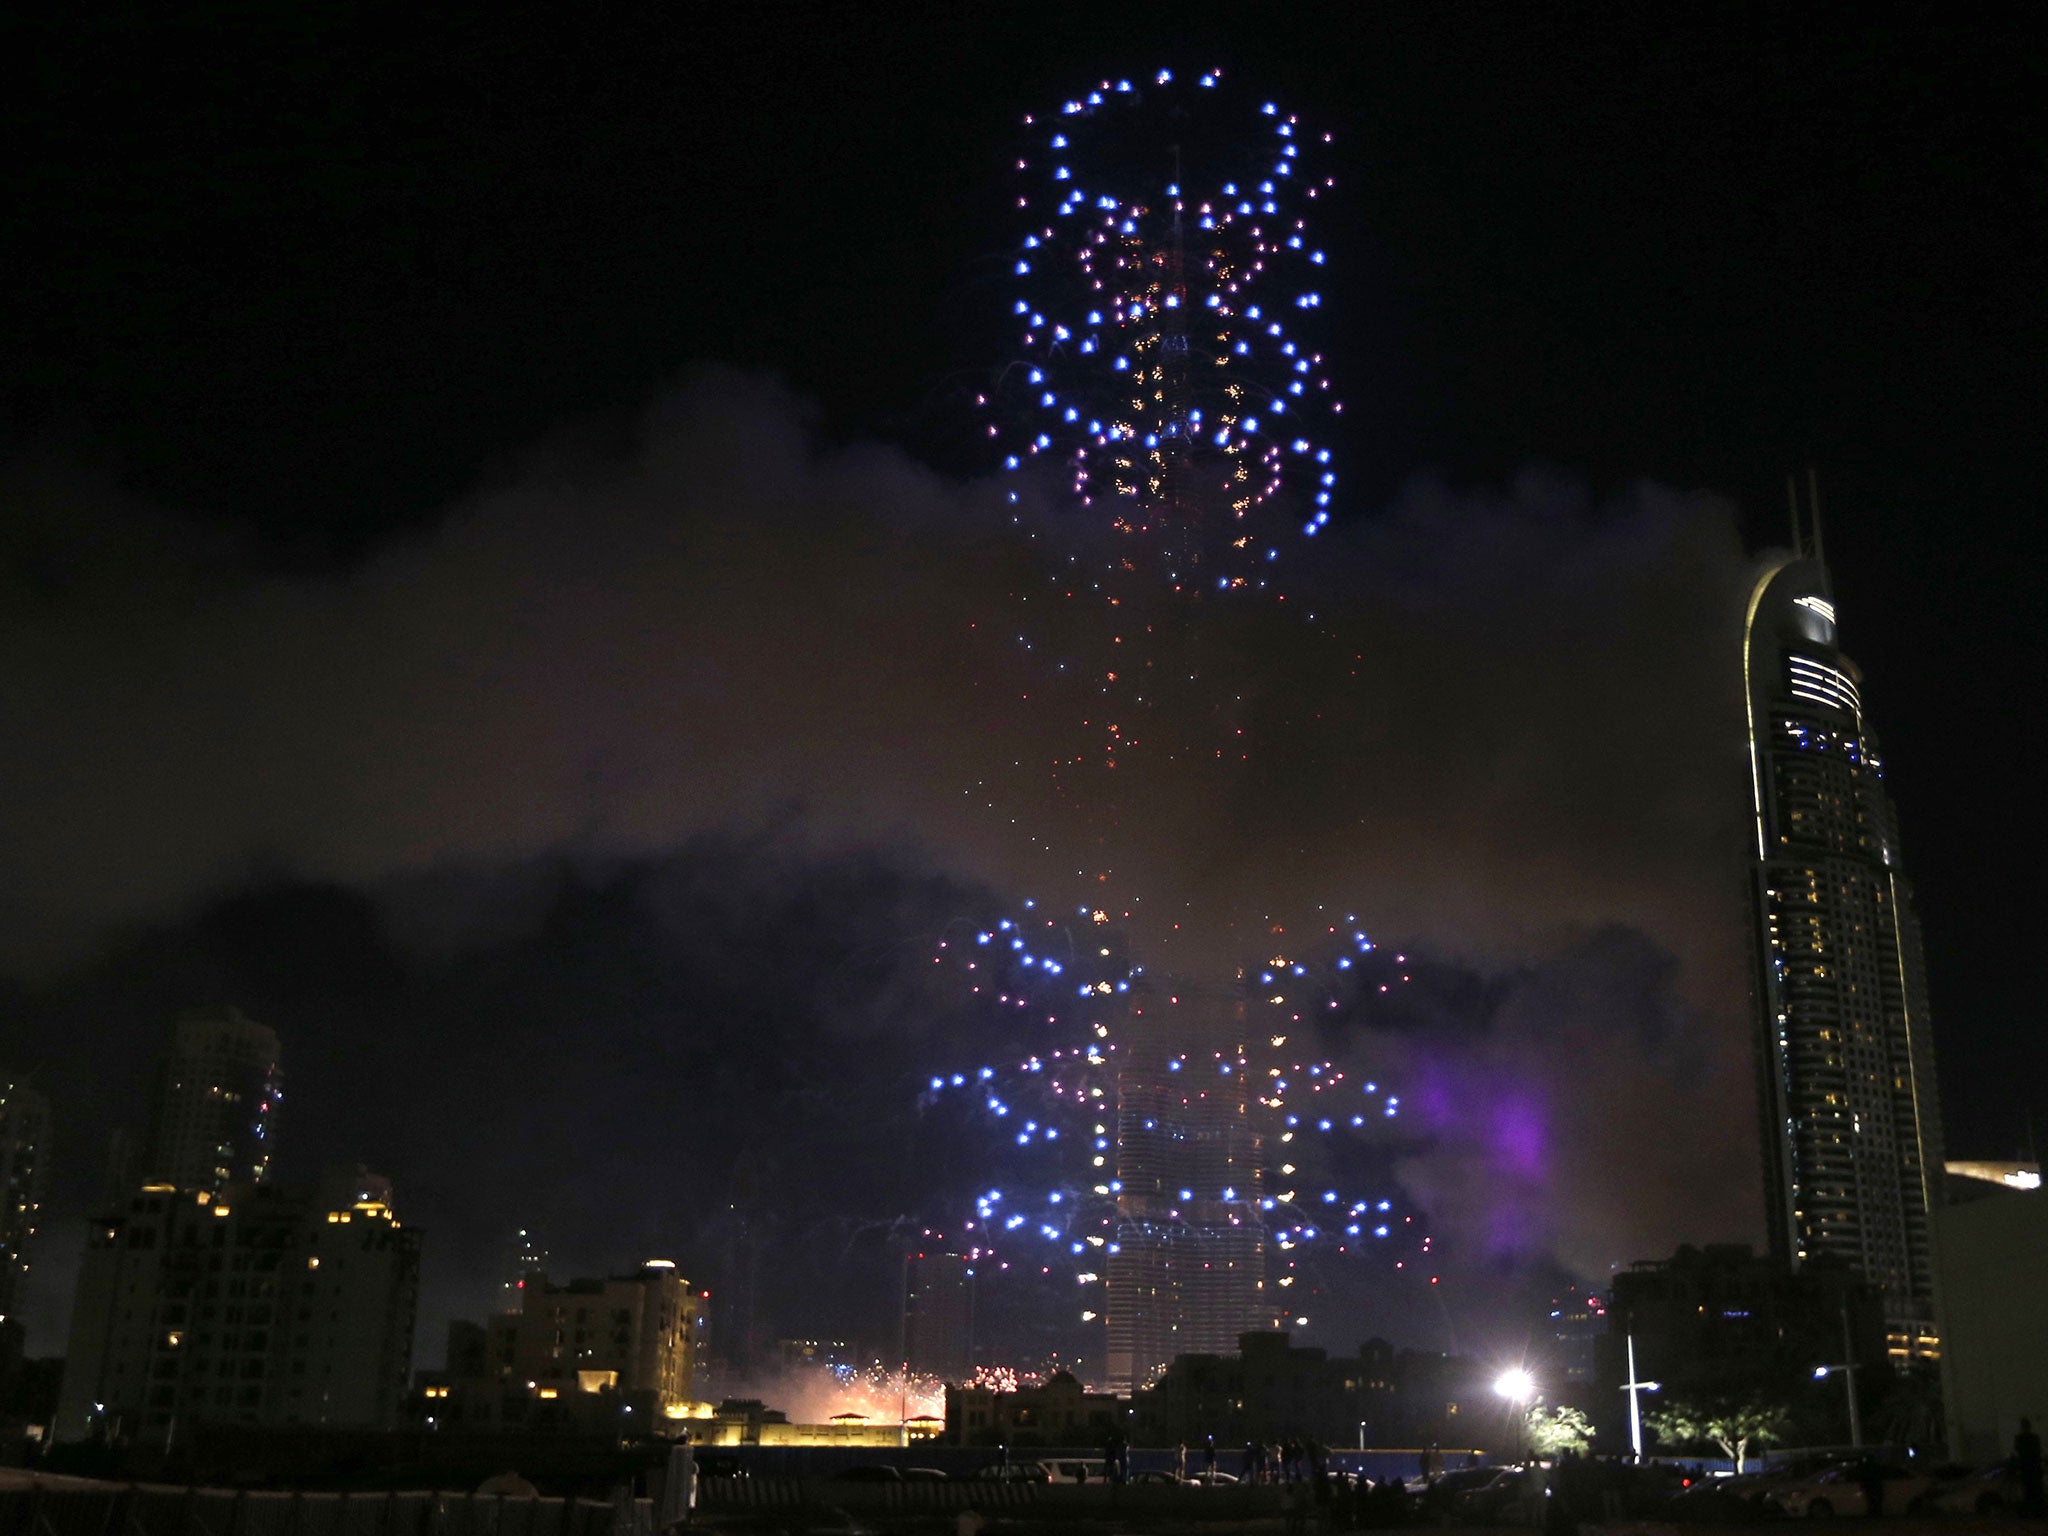 Dubai celebrates the New Year at the Burj Khalifa, the world's tallest tower